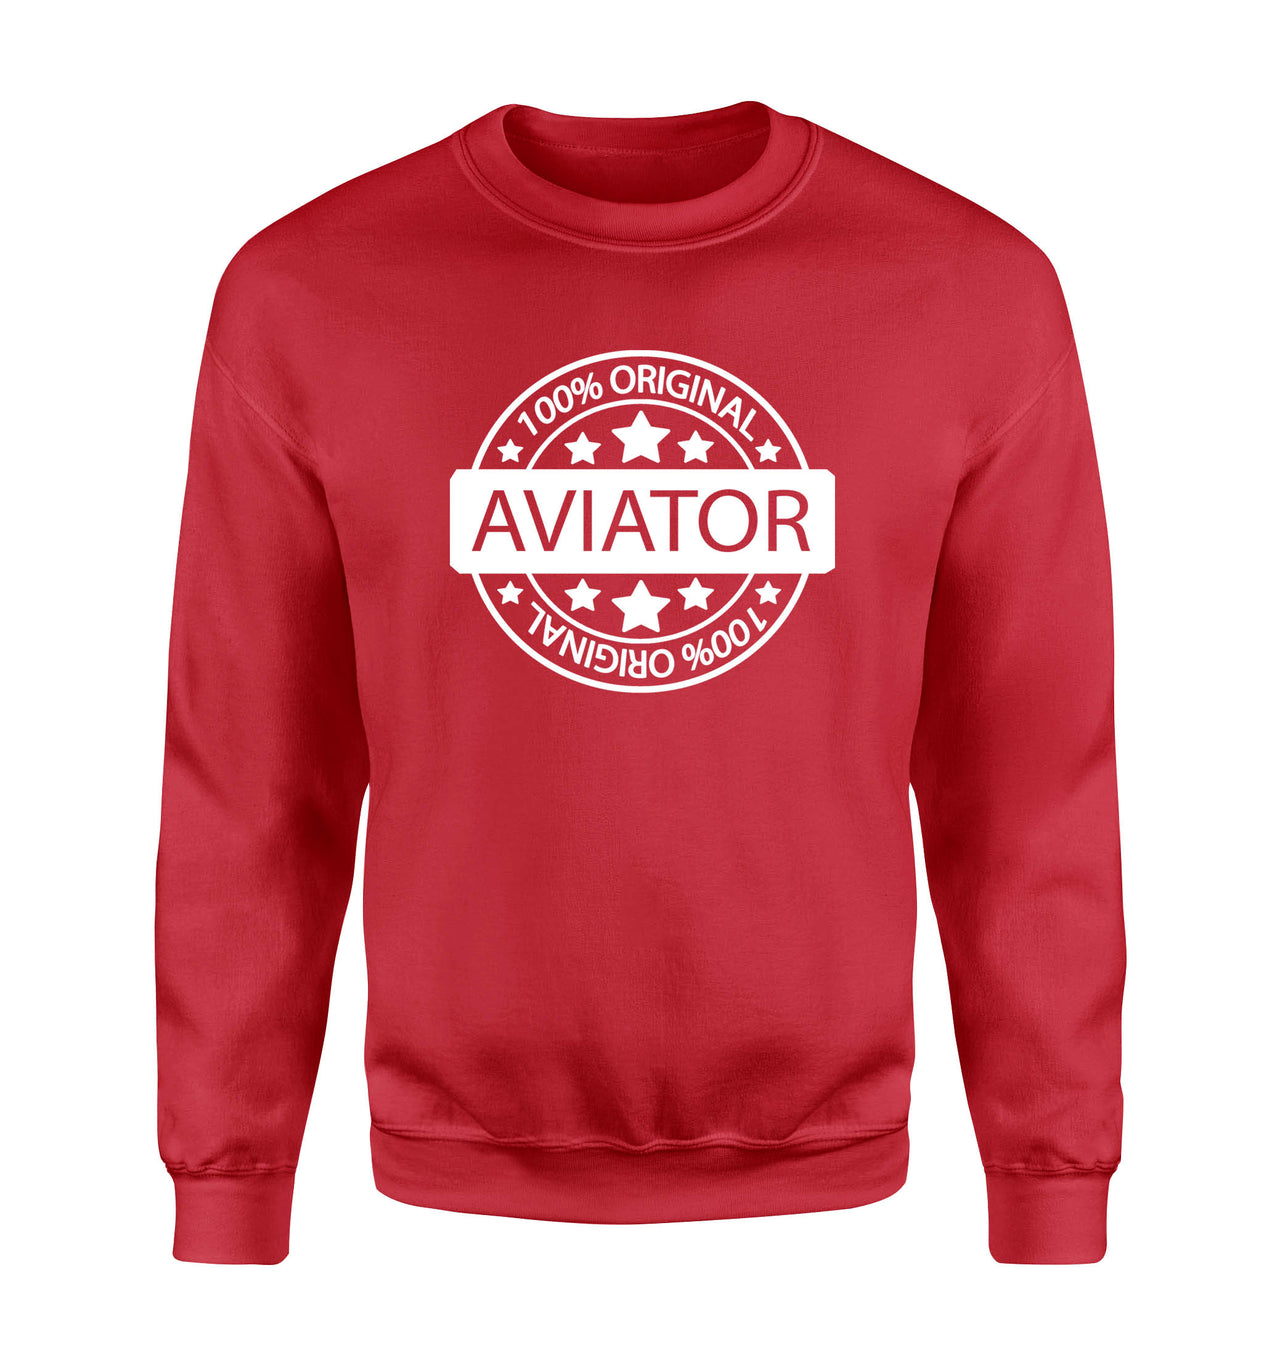 %100 Original Aviator Designed Sweatshirts